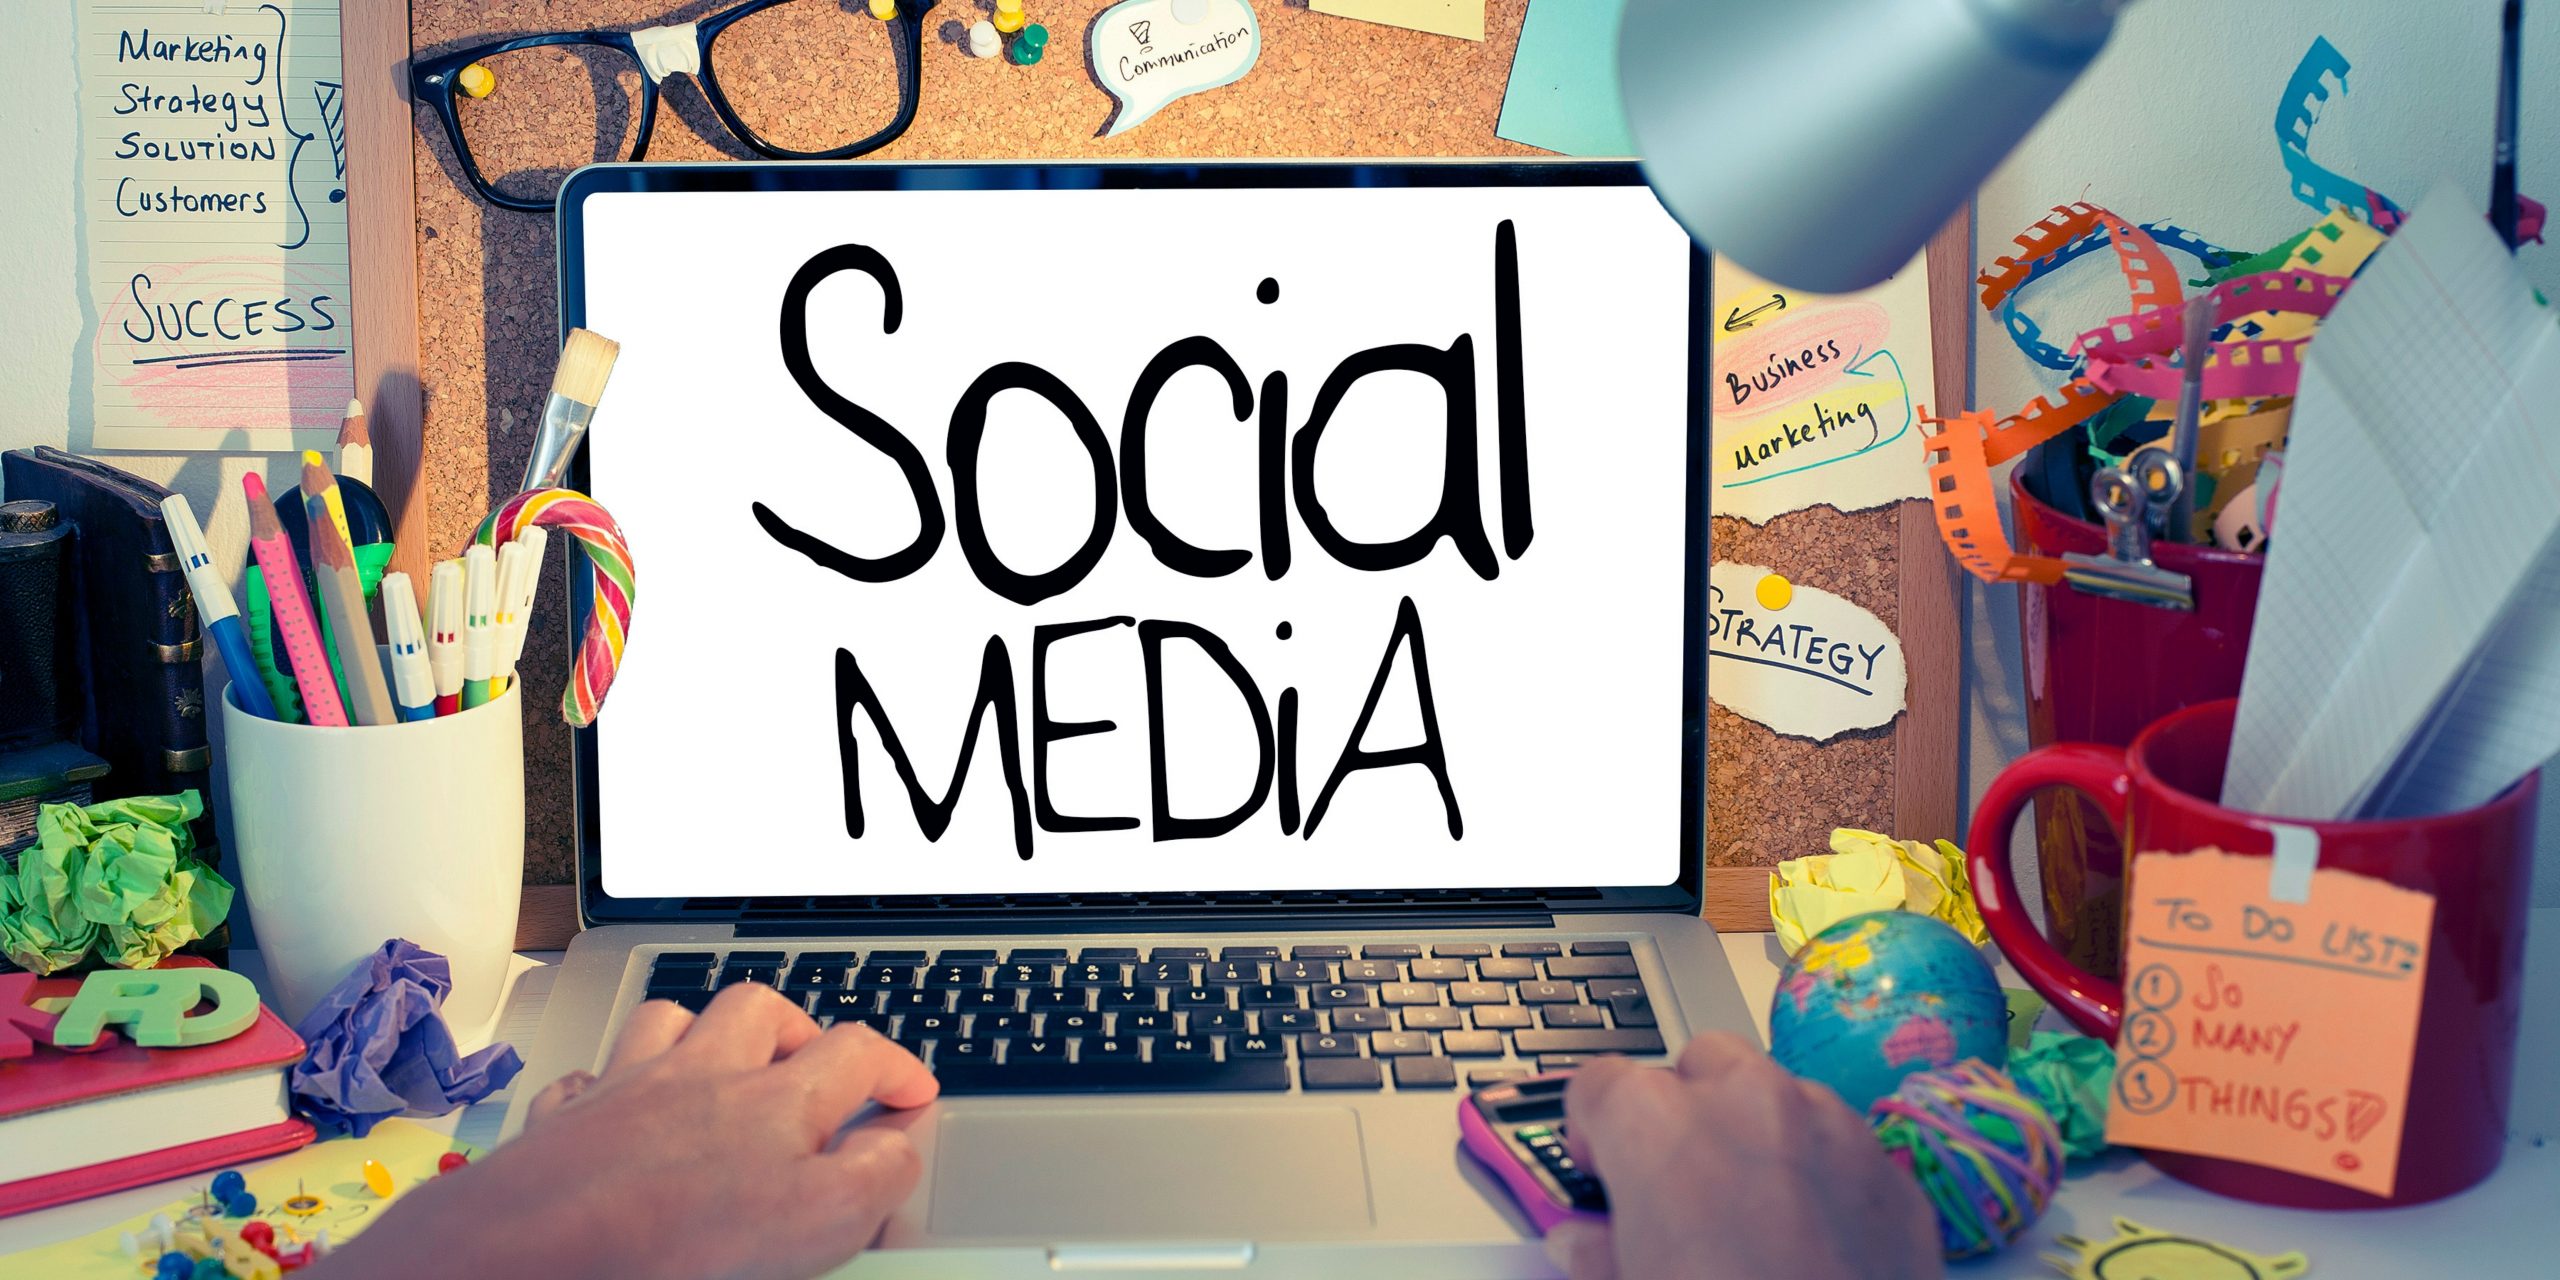 A Breakdown of Social Media Marketing Trends